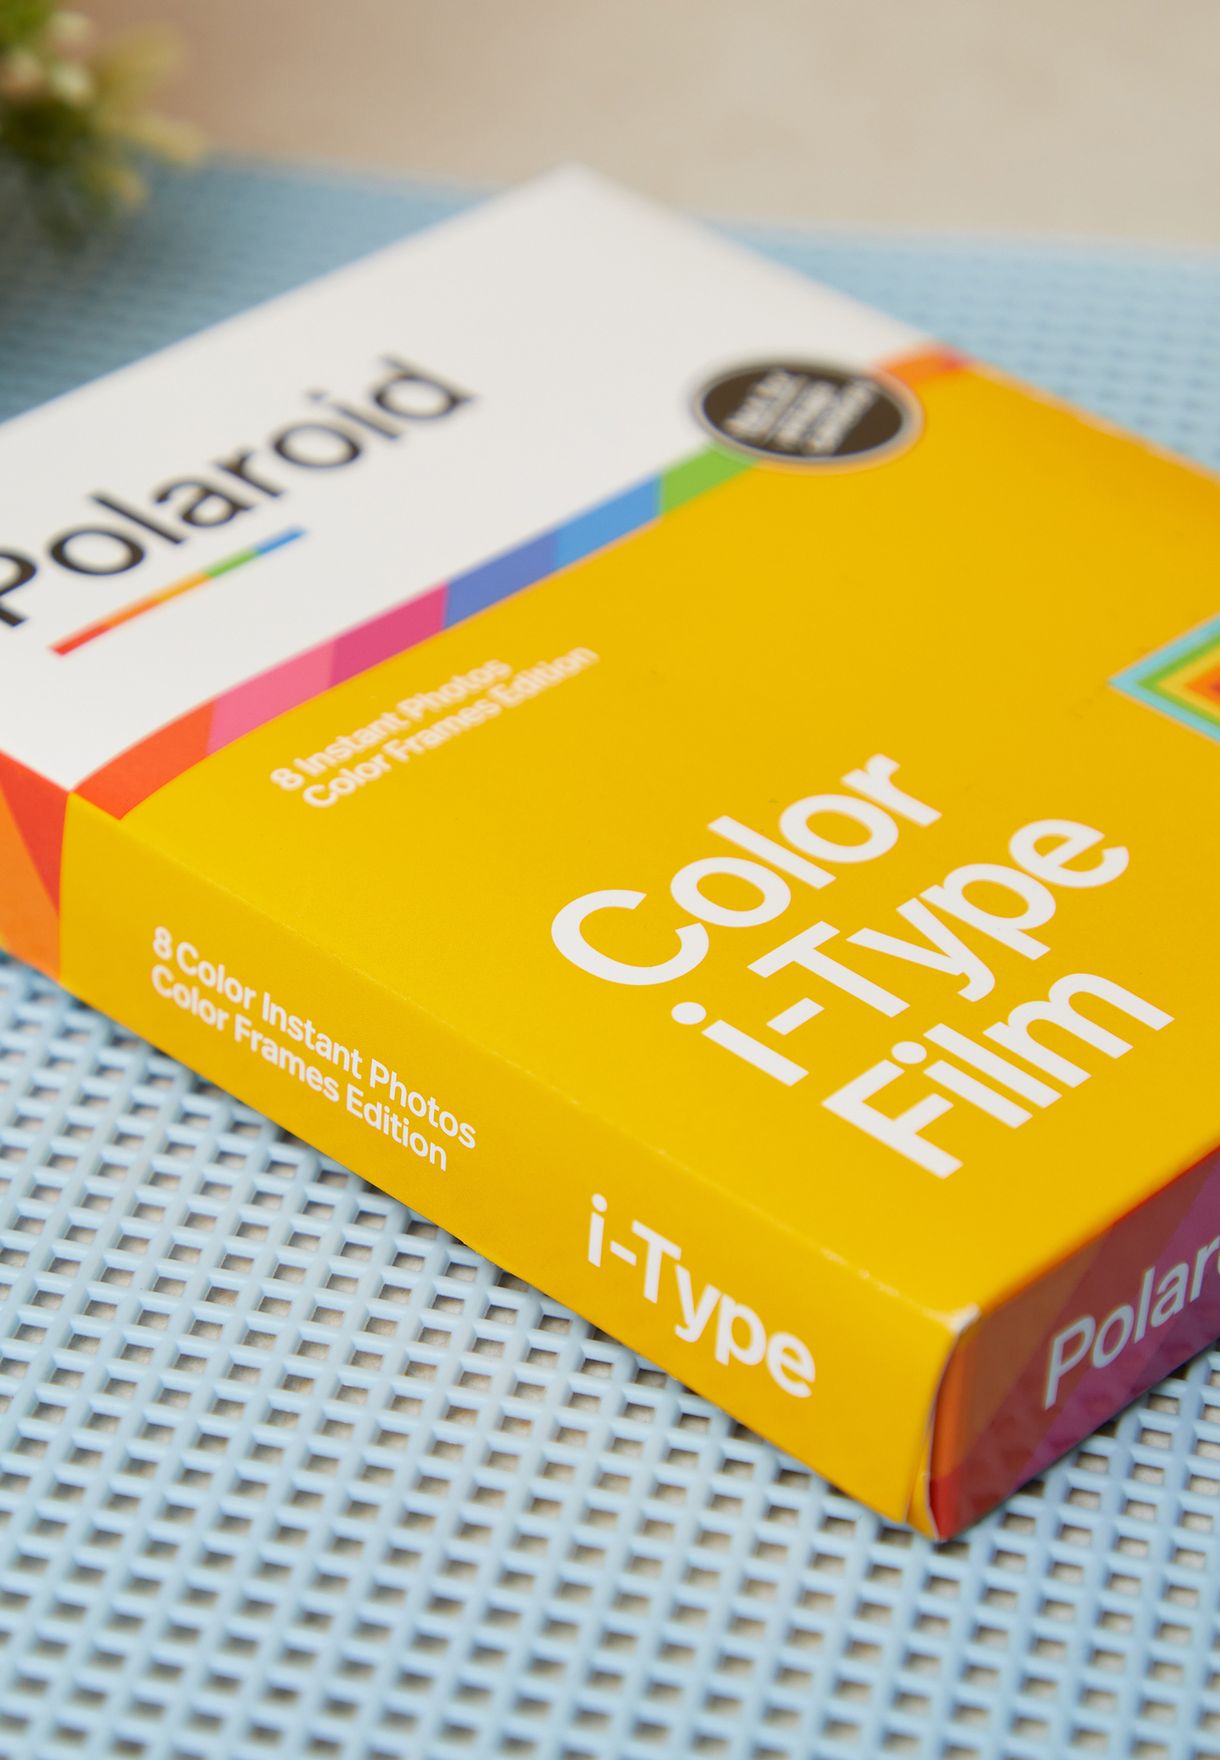 Polaroid Color Film For I-Type - Color Frames